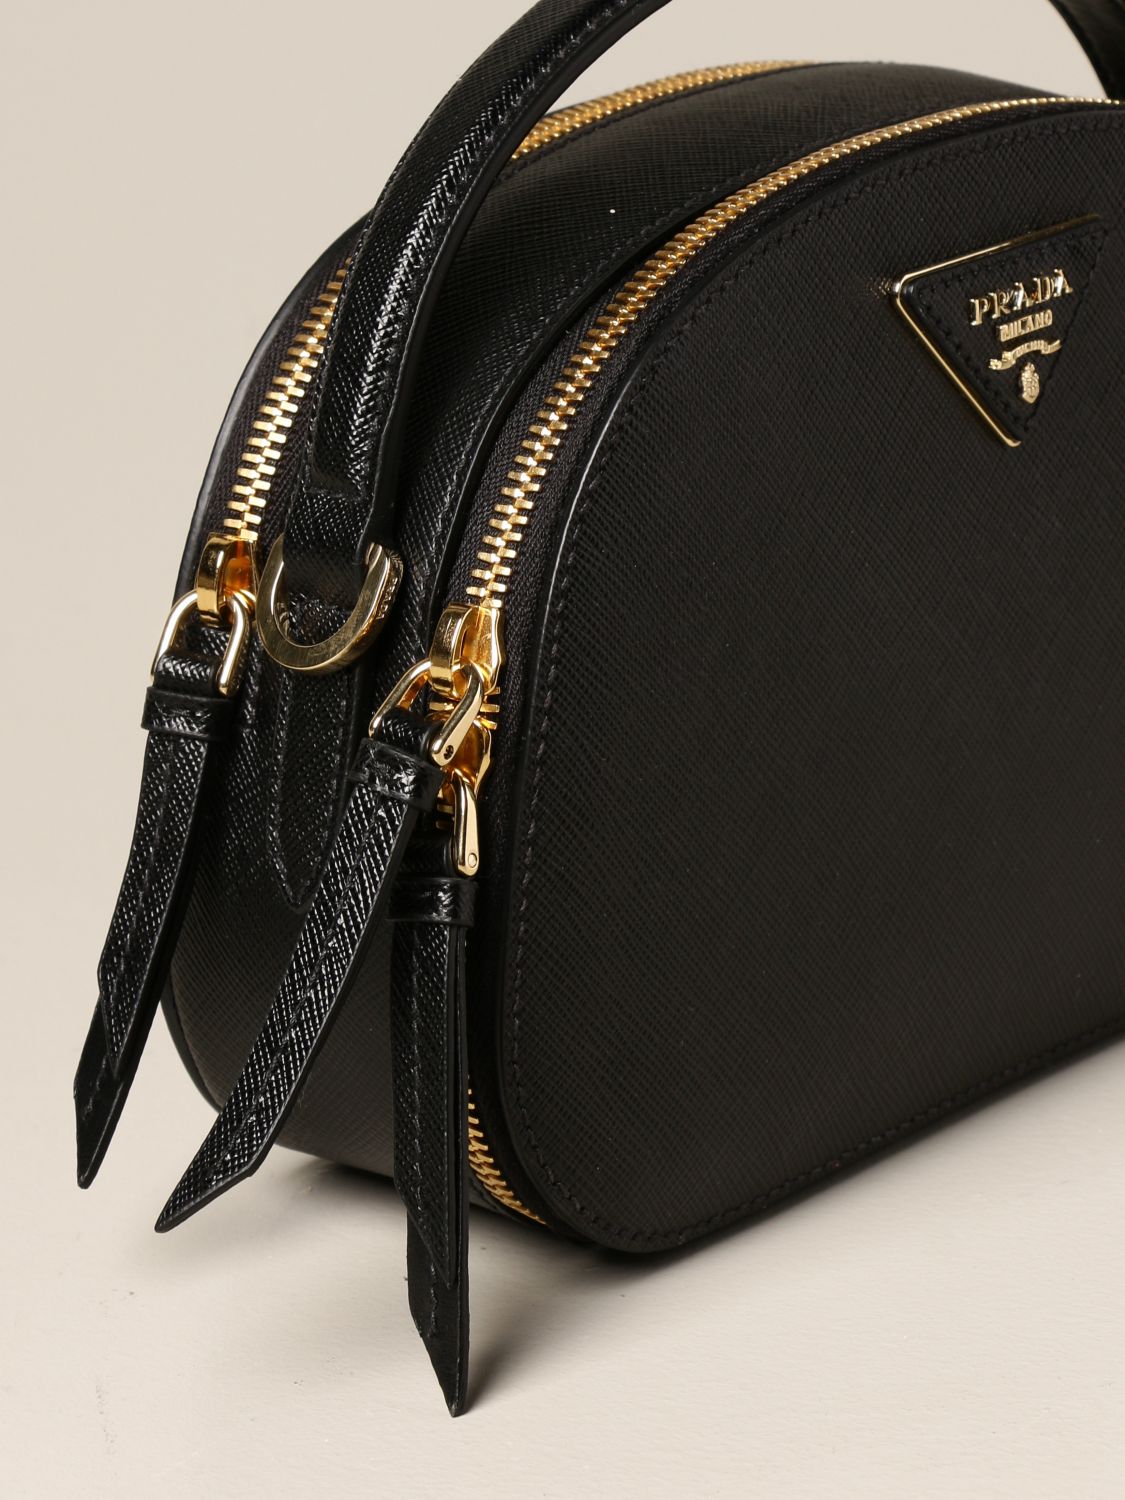 PRADA: Odette bag in saffiano leather - Black | Prada mini bag 1BH123 NZV  online on 